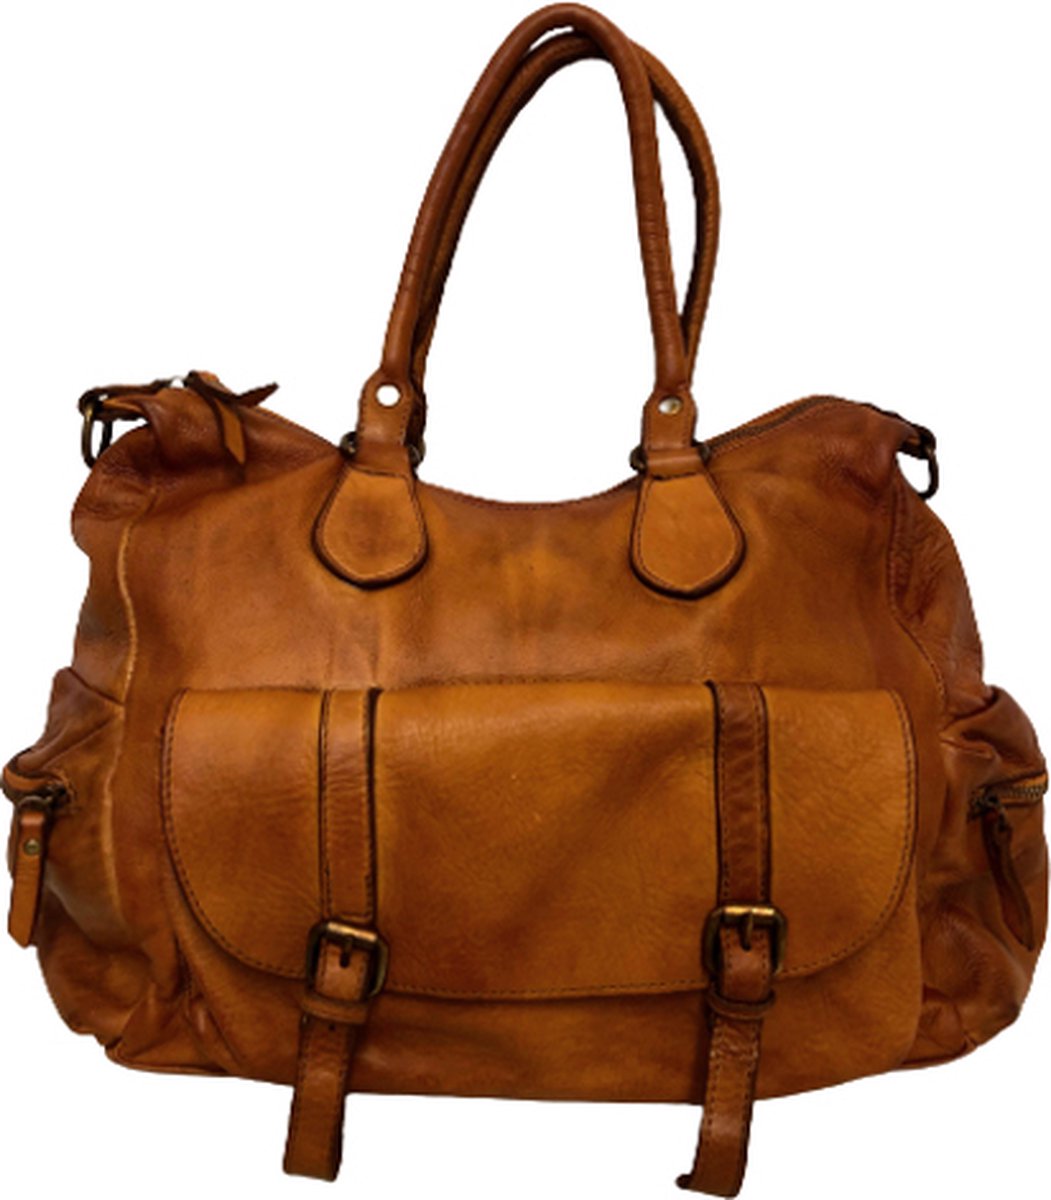 Hommard leren Light Brown Saddle Bag, Echt leer, Real leather, Made in Italy, Leren Tas